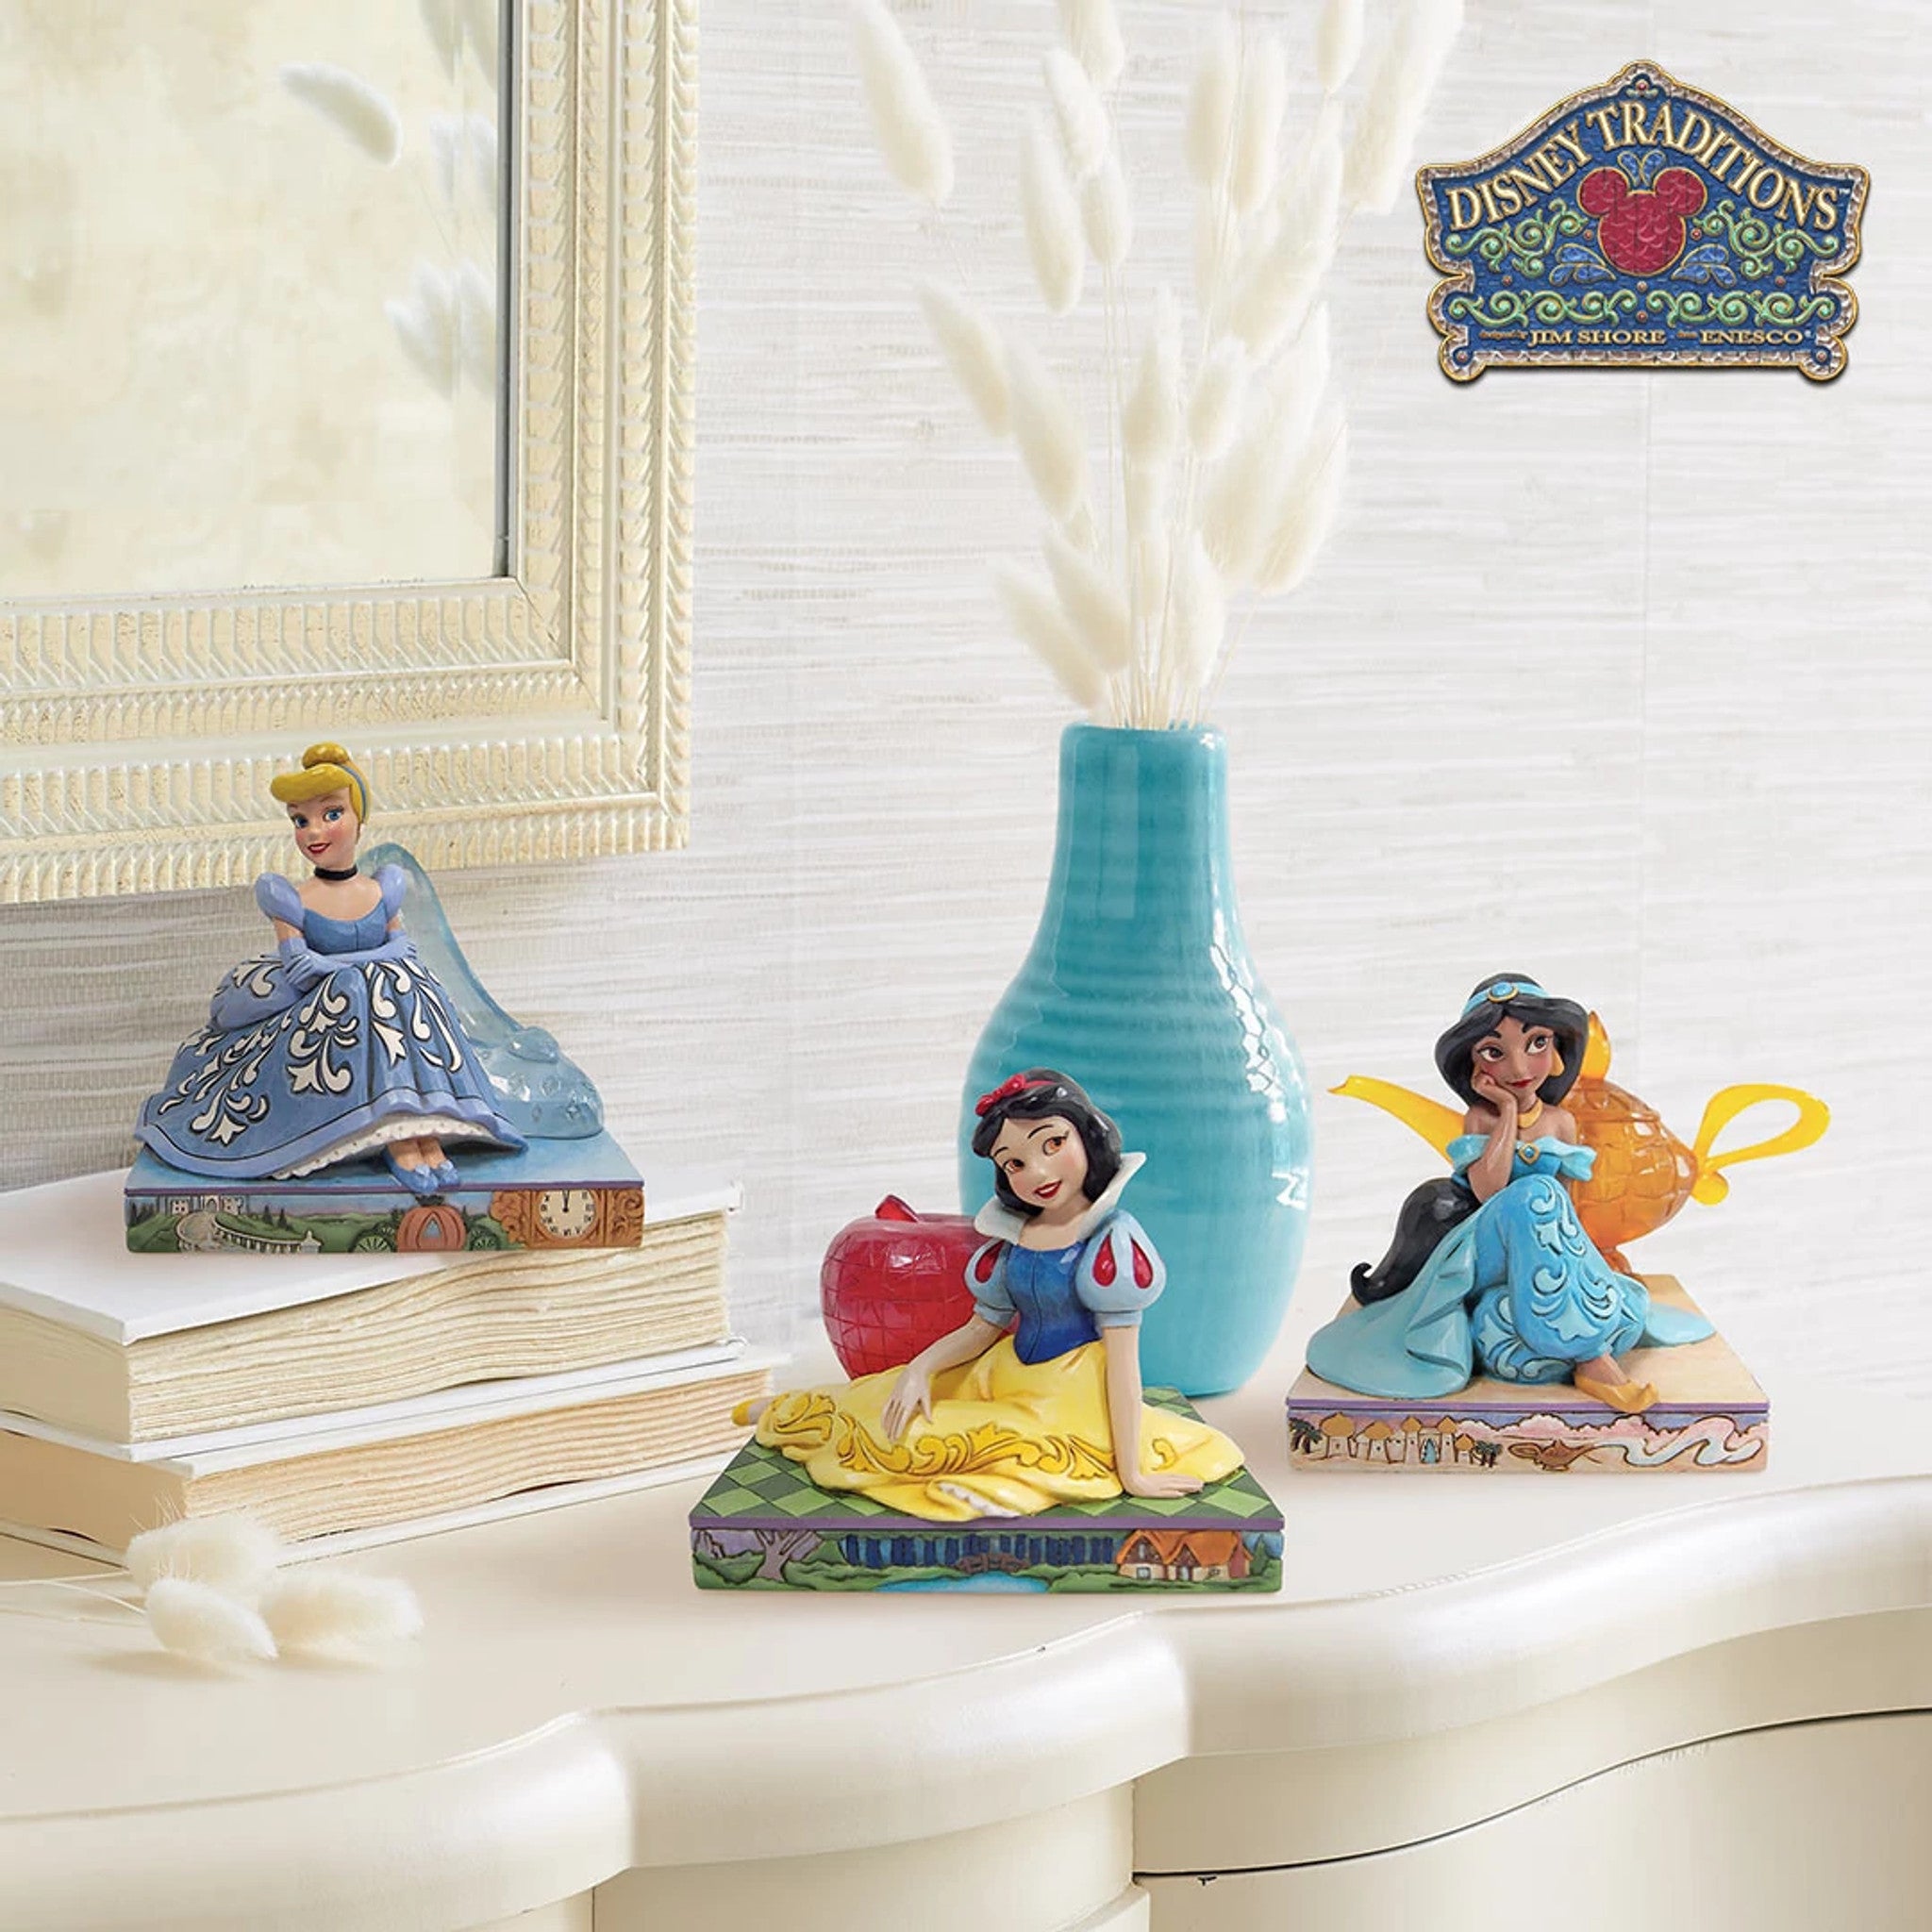 Jim Shore Disney Snow White and Apple Figurine, 4.8 - Figurines - Hallmark